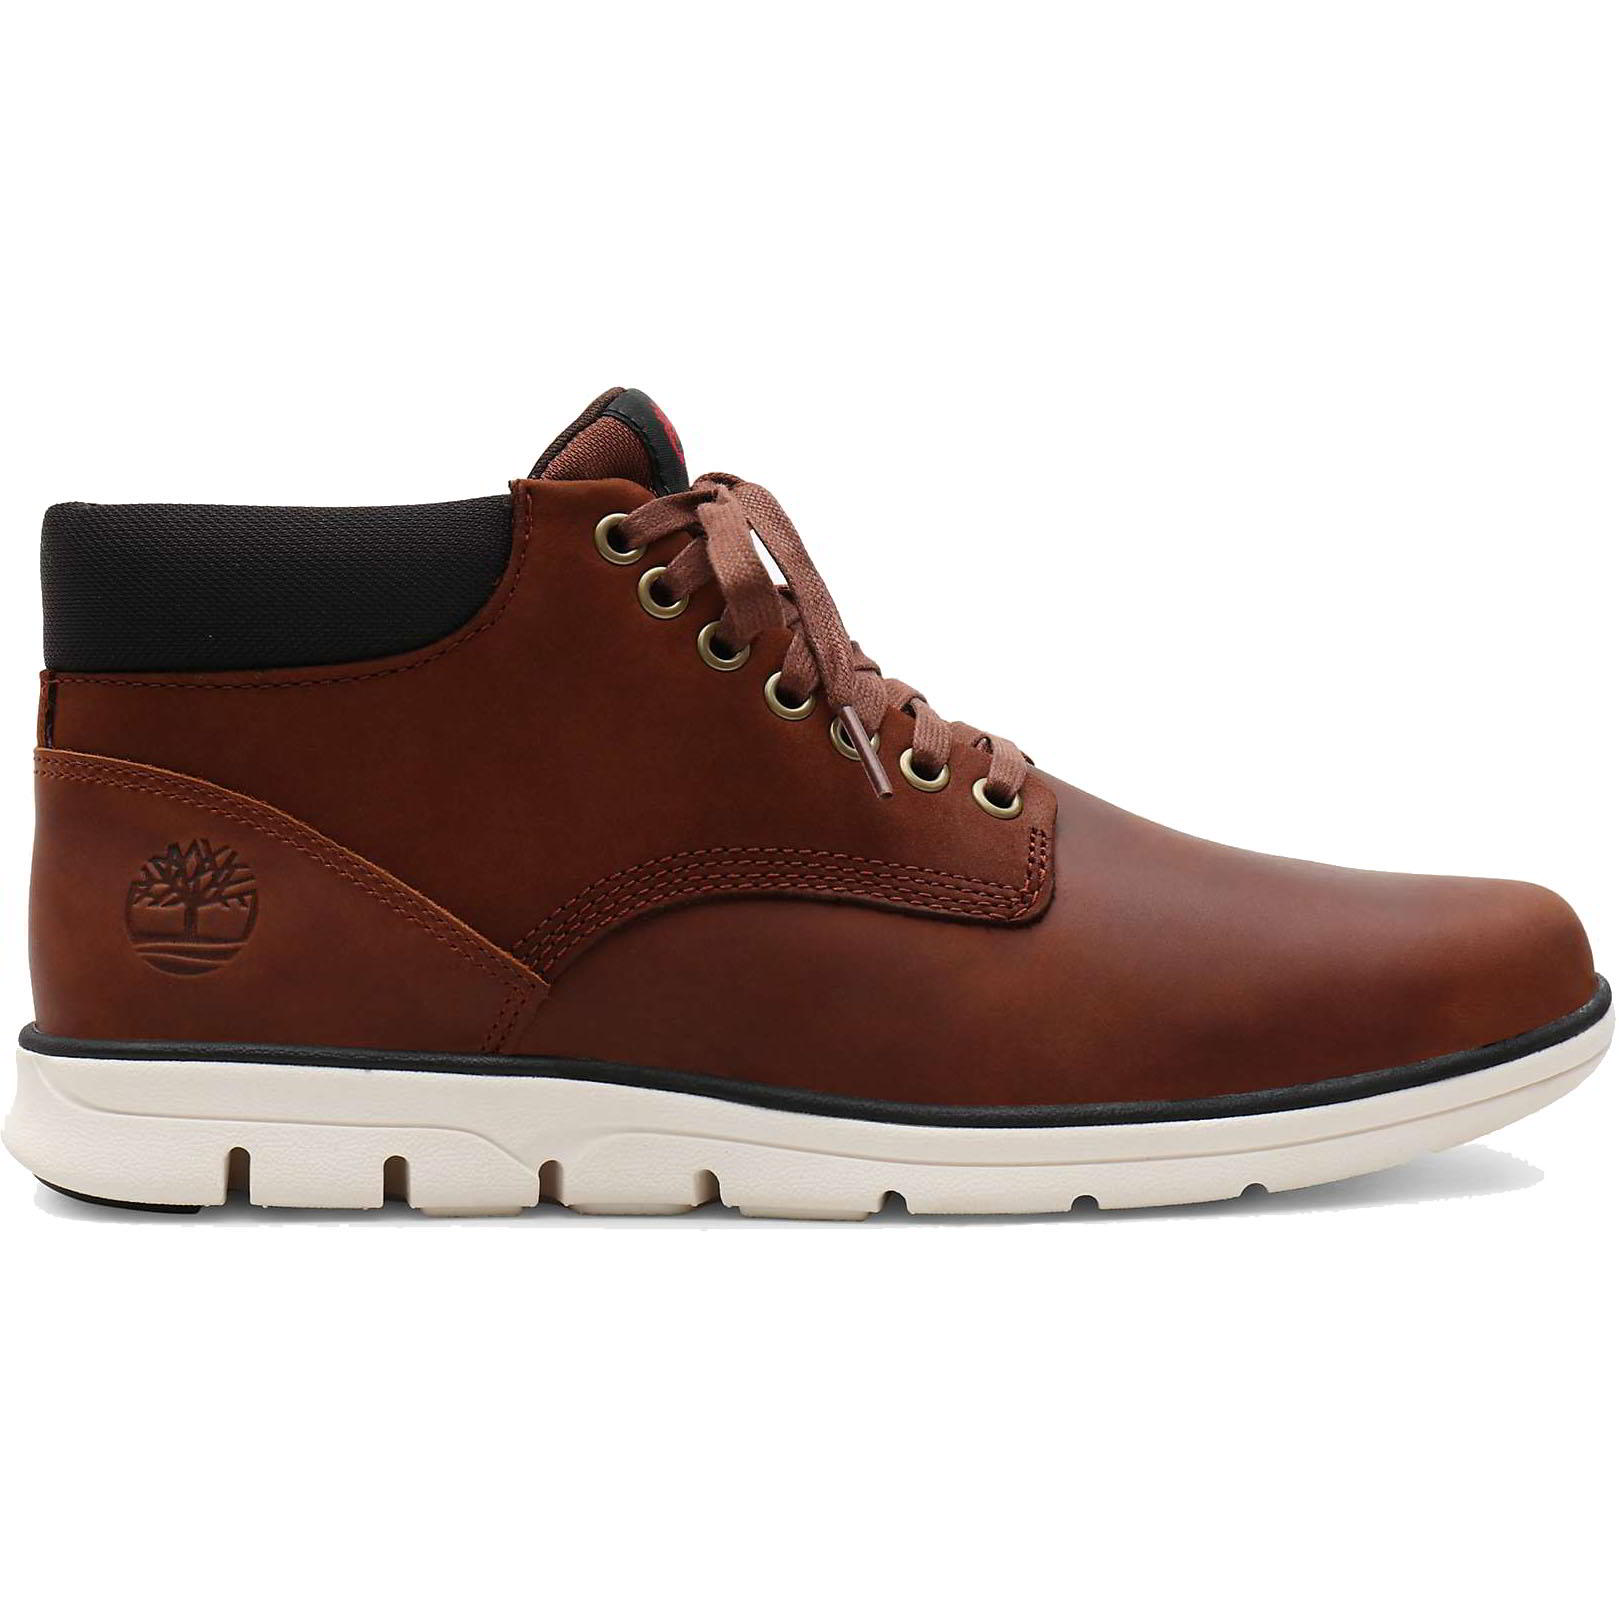 Timberland Men's Bradstreet Chukka Leather Ankle Boots - UK 9.5